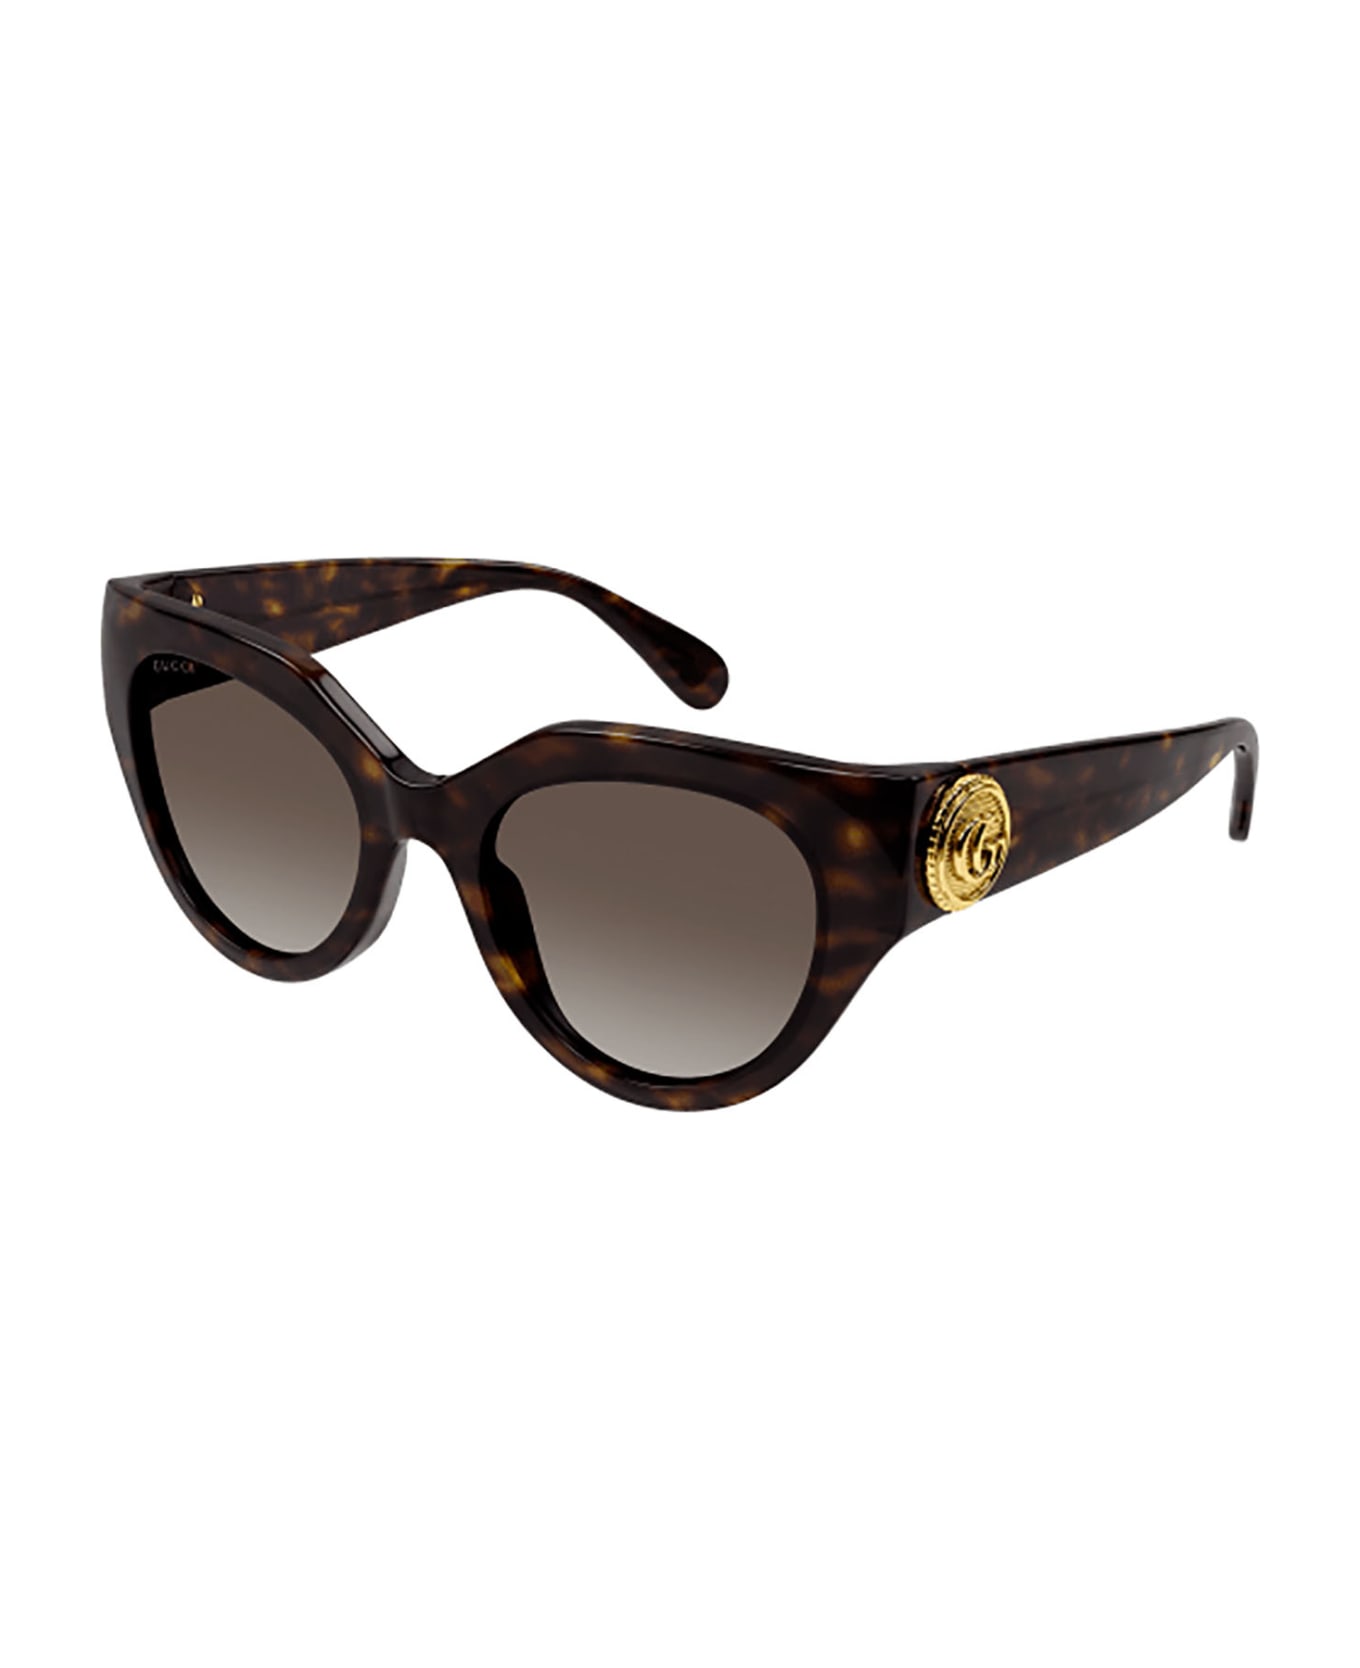 Gucci Eyewear GG1408S Sunglasses - Havana Havana Brown サングラス